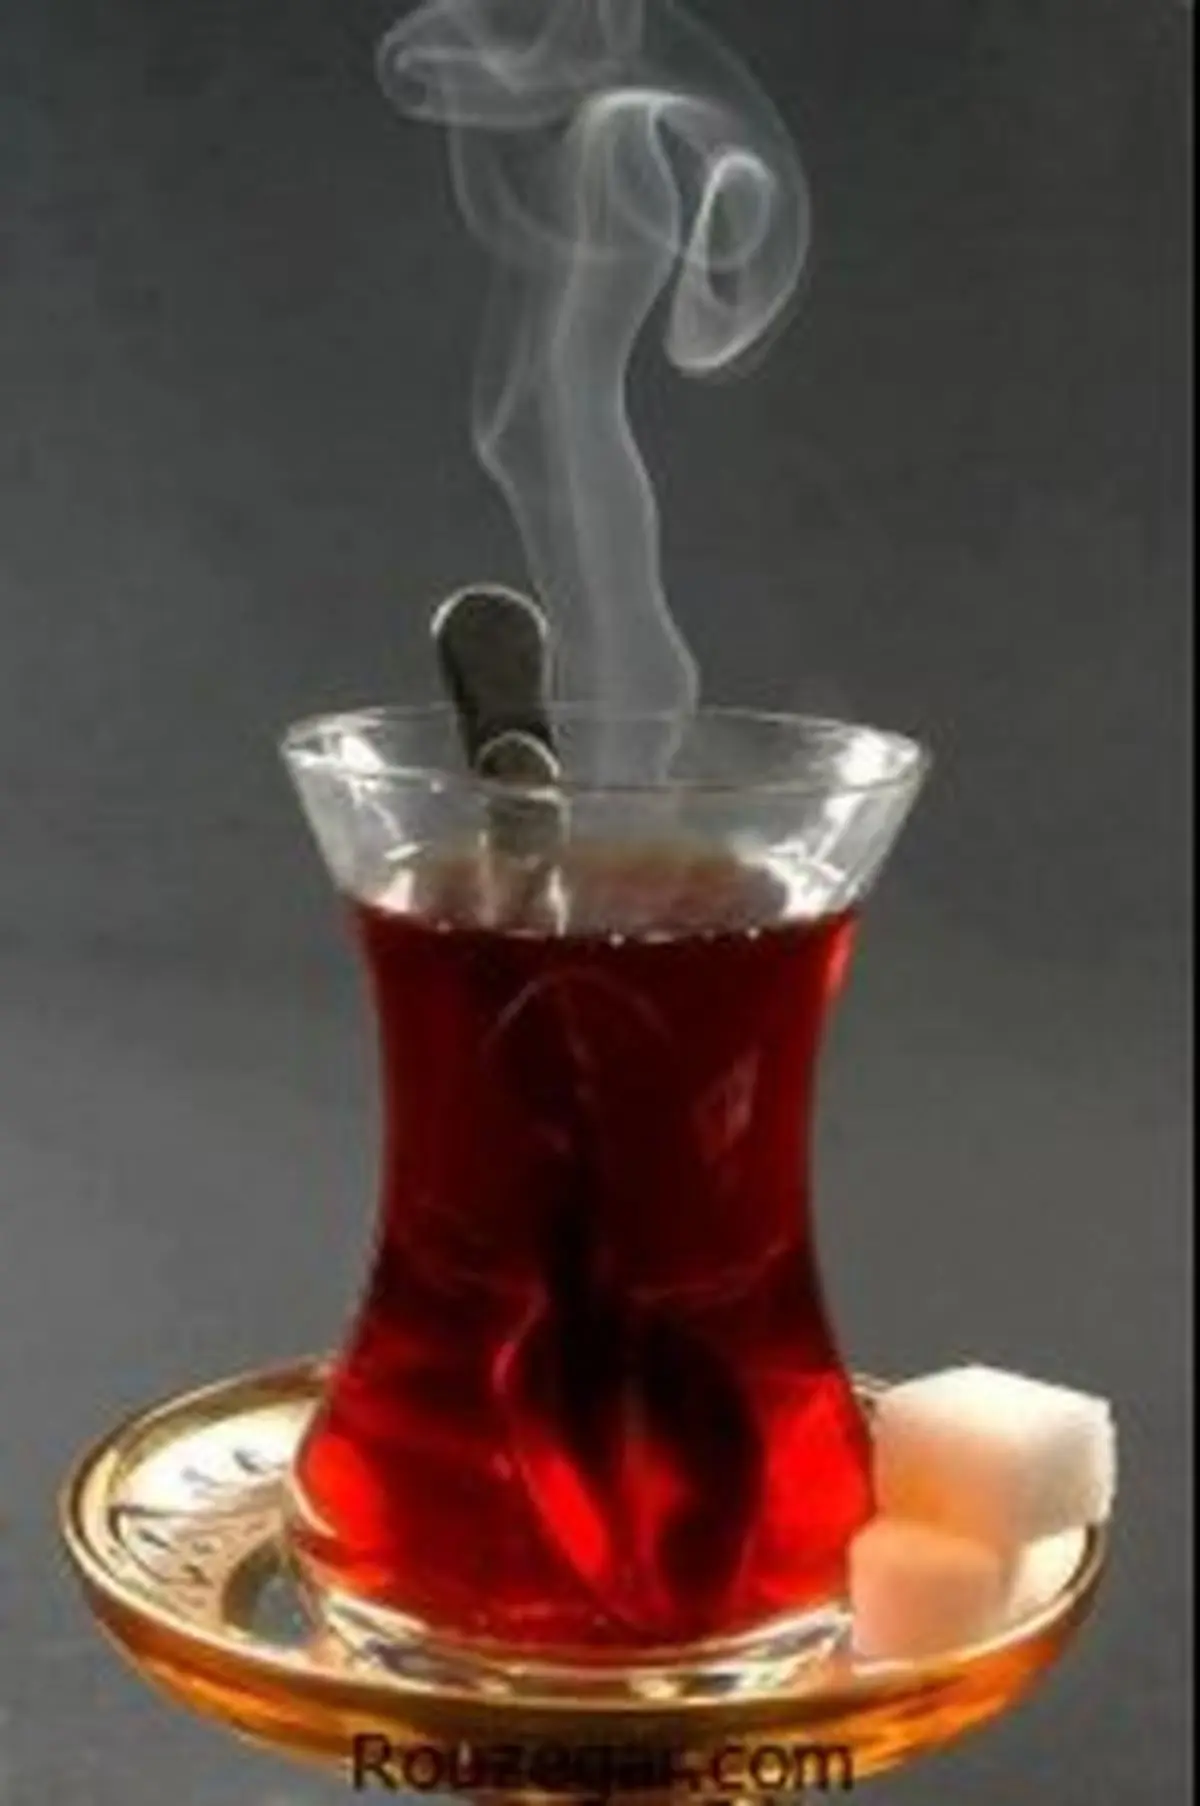 خطر مصرف چای داغ